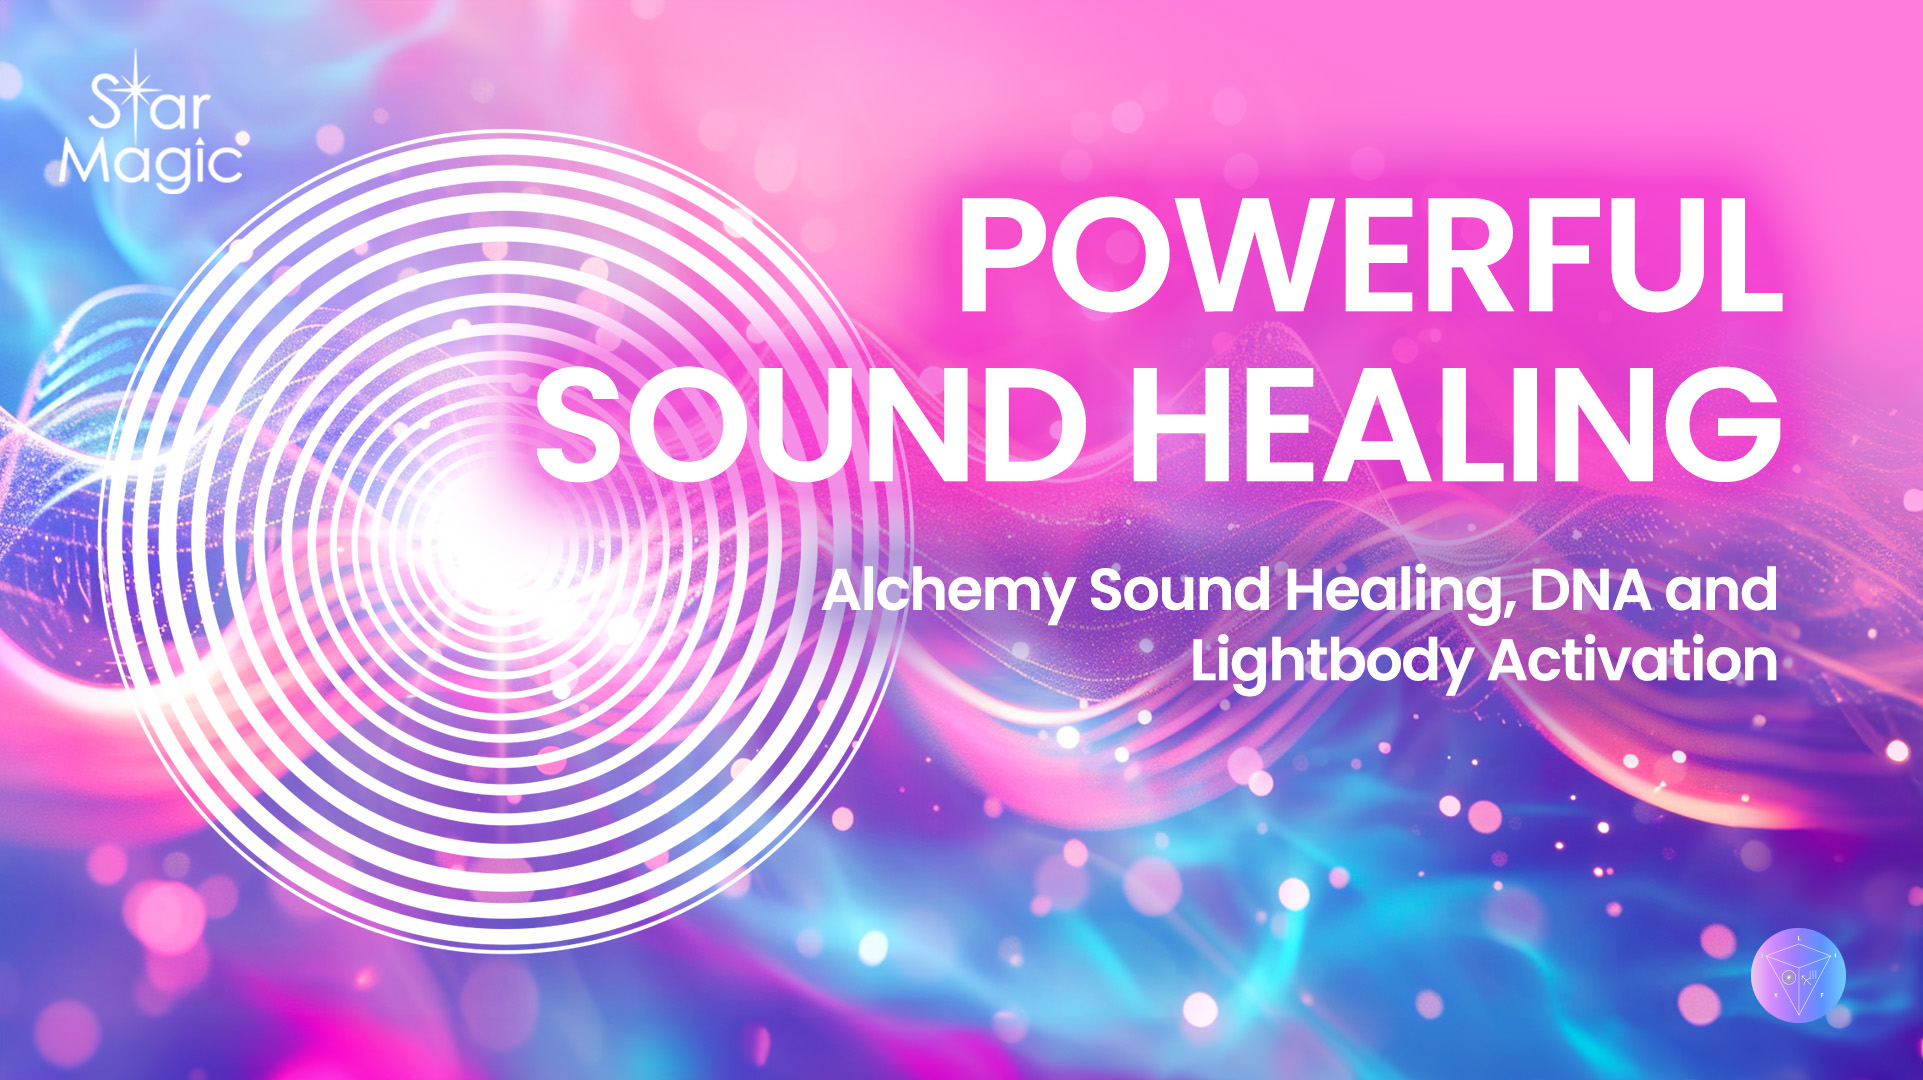 Alchemy Sound Healing, DNA and Lightbody Activation